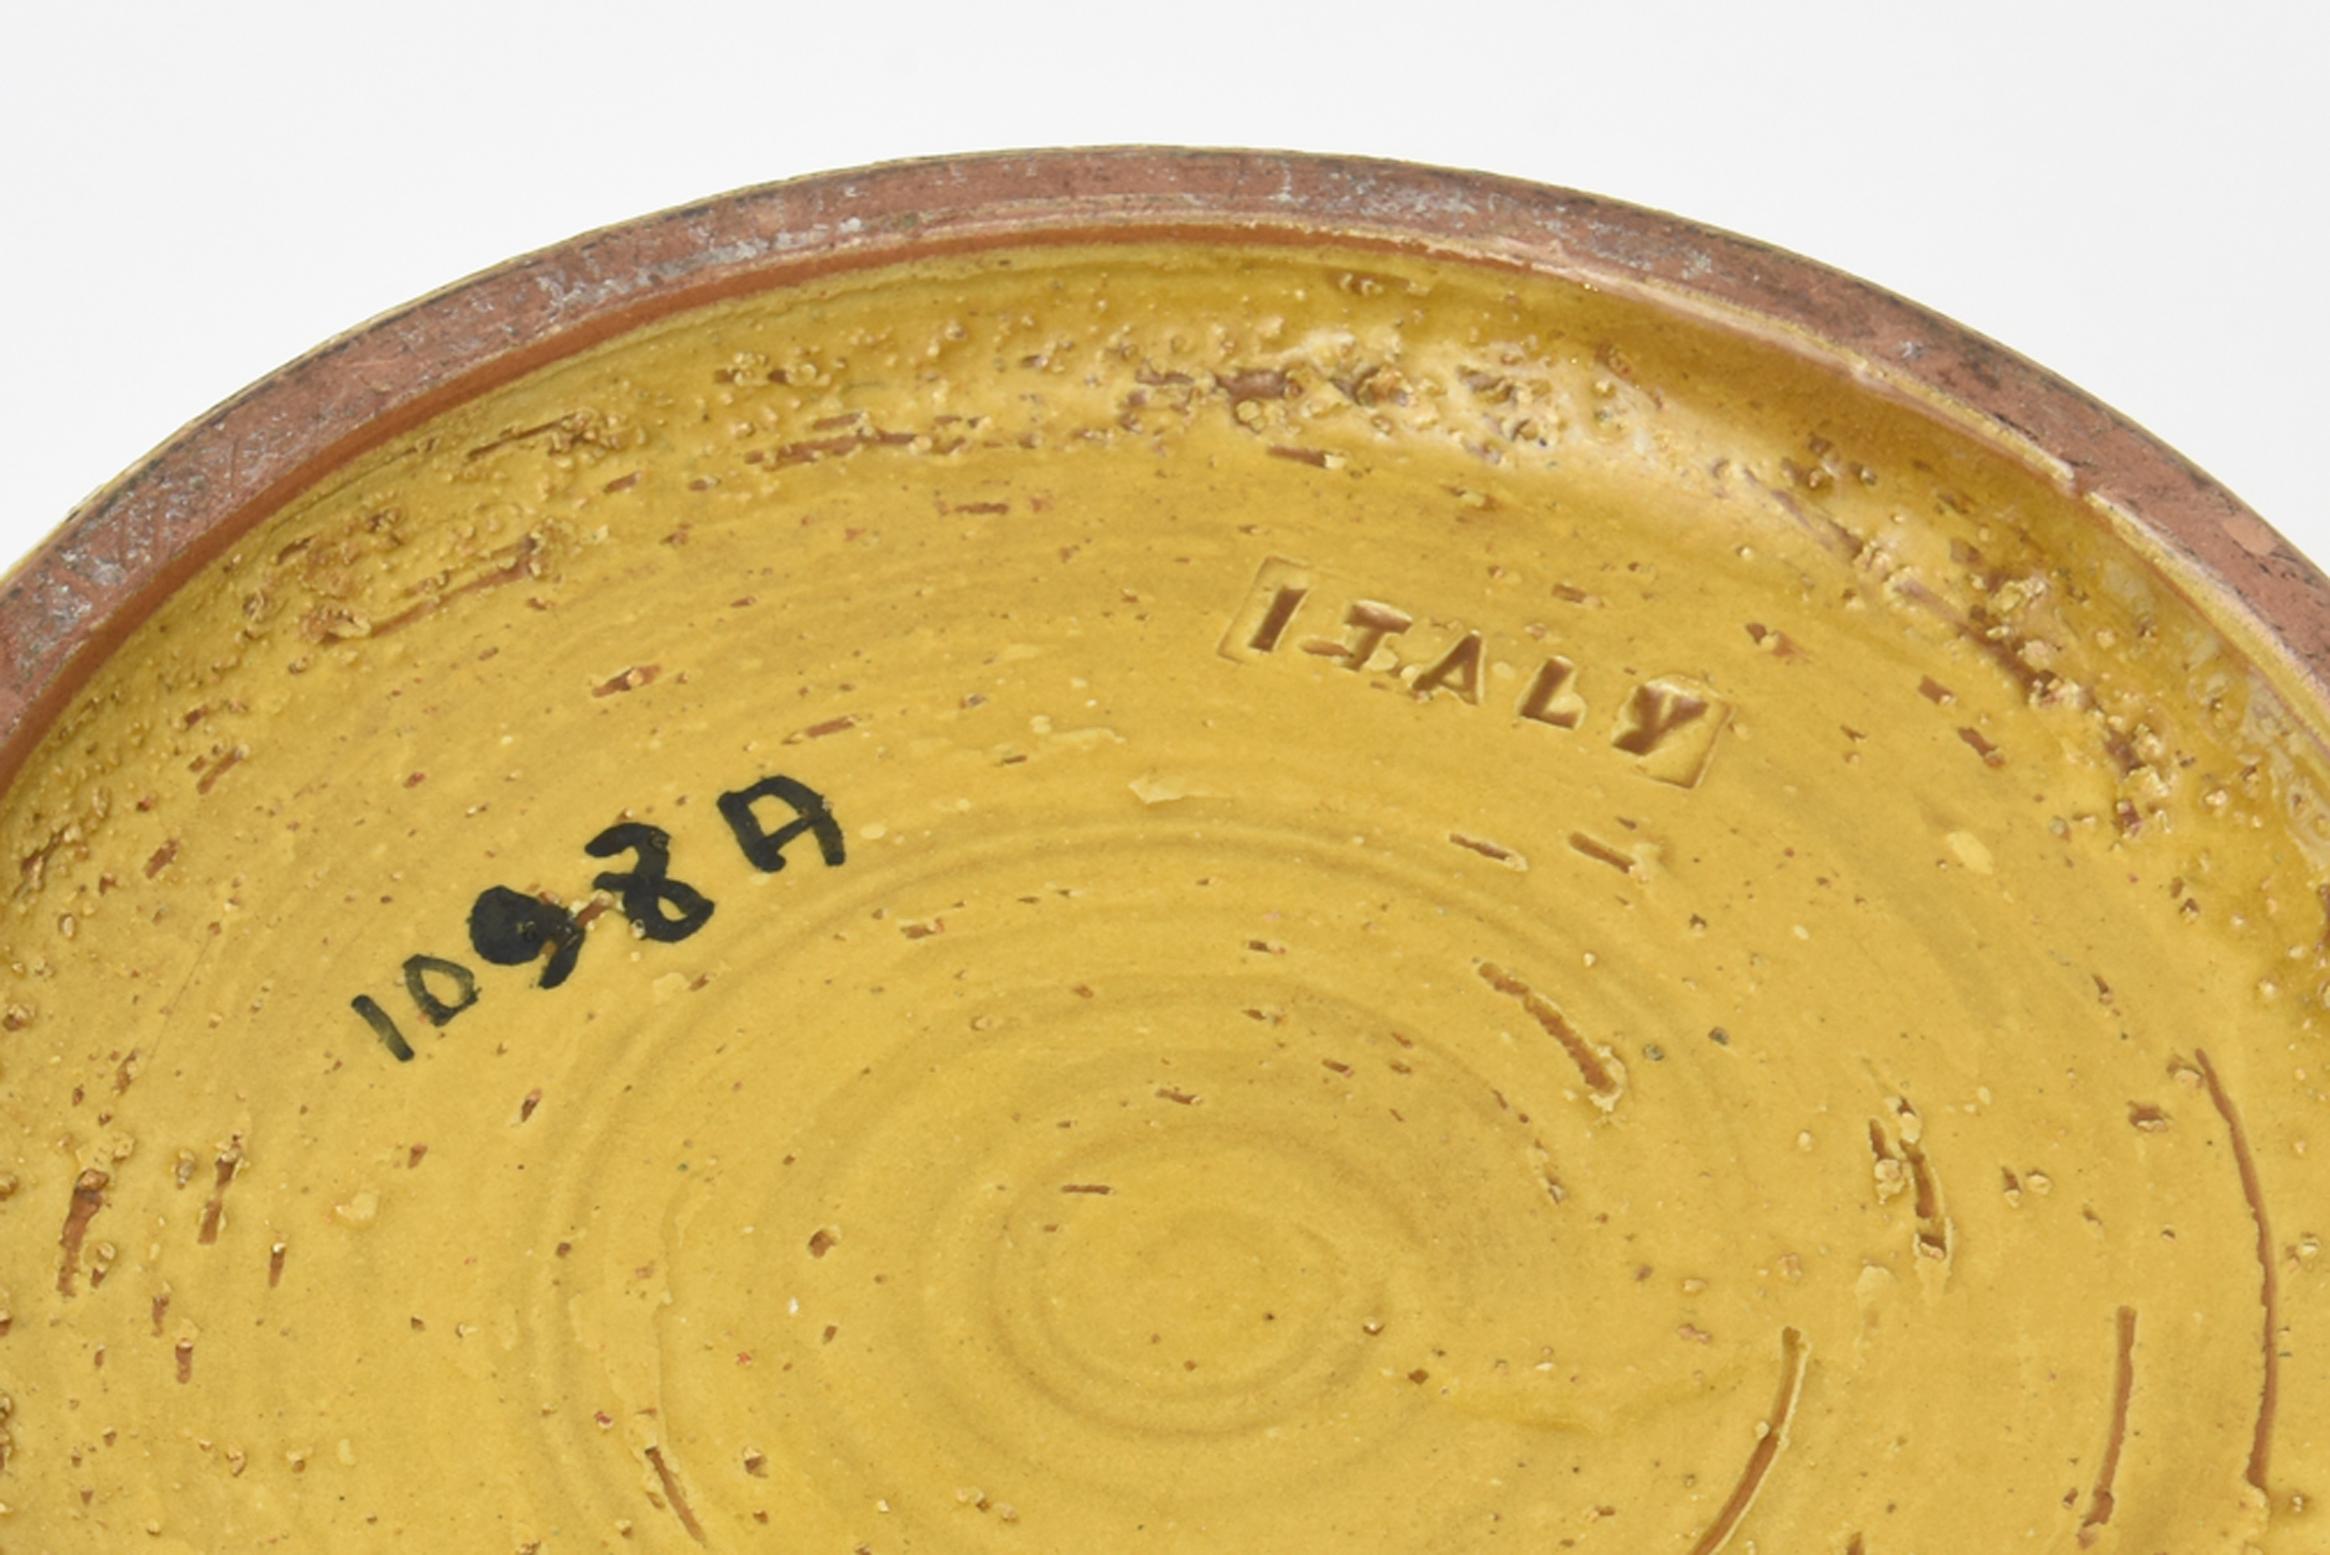 Bitossi Glazed Mustard Ceramic Lidded Box with Fused Glass Mosaic Top Vintage 1